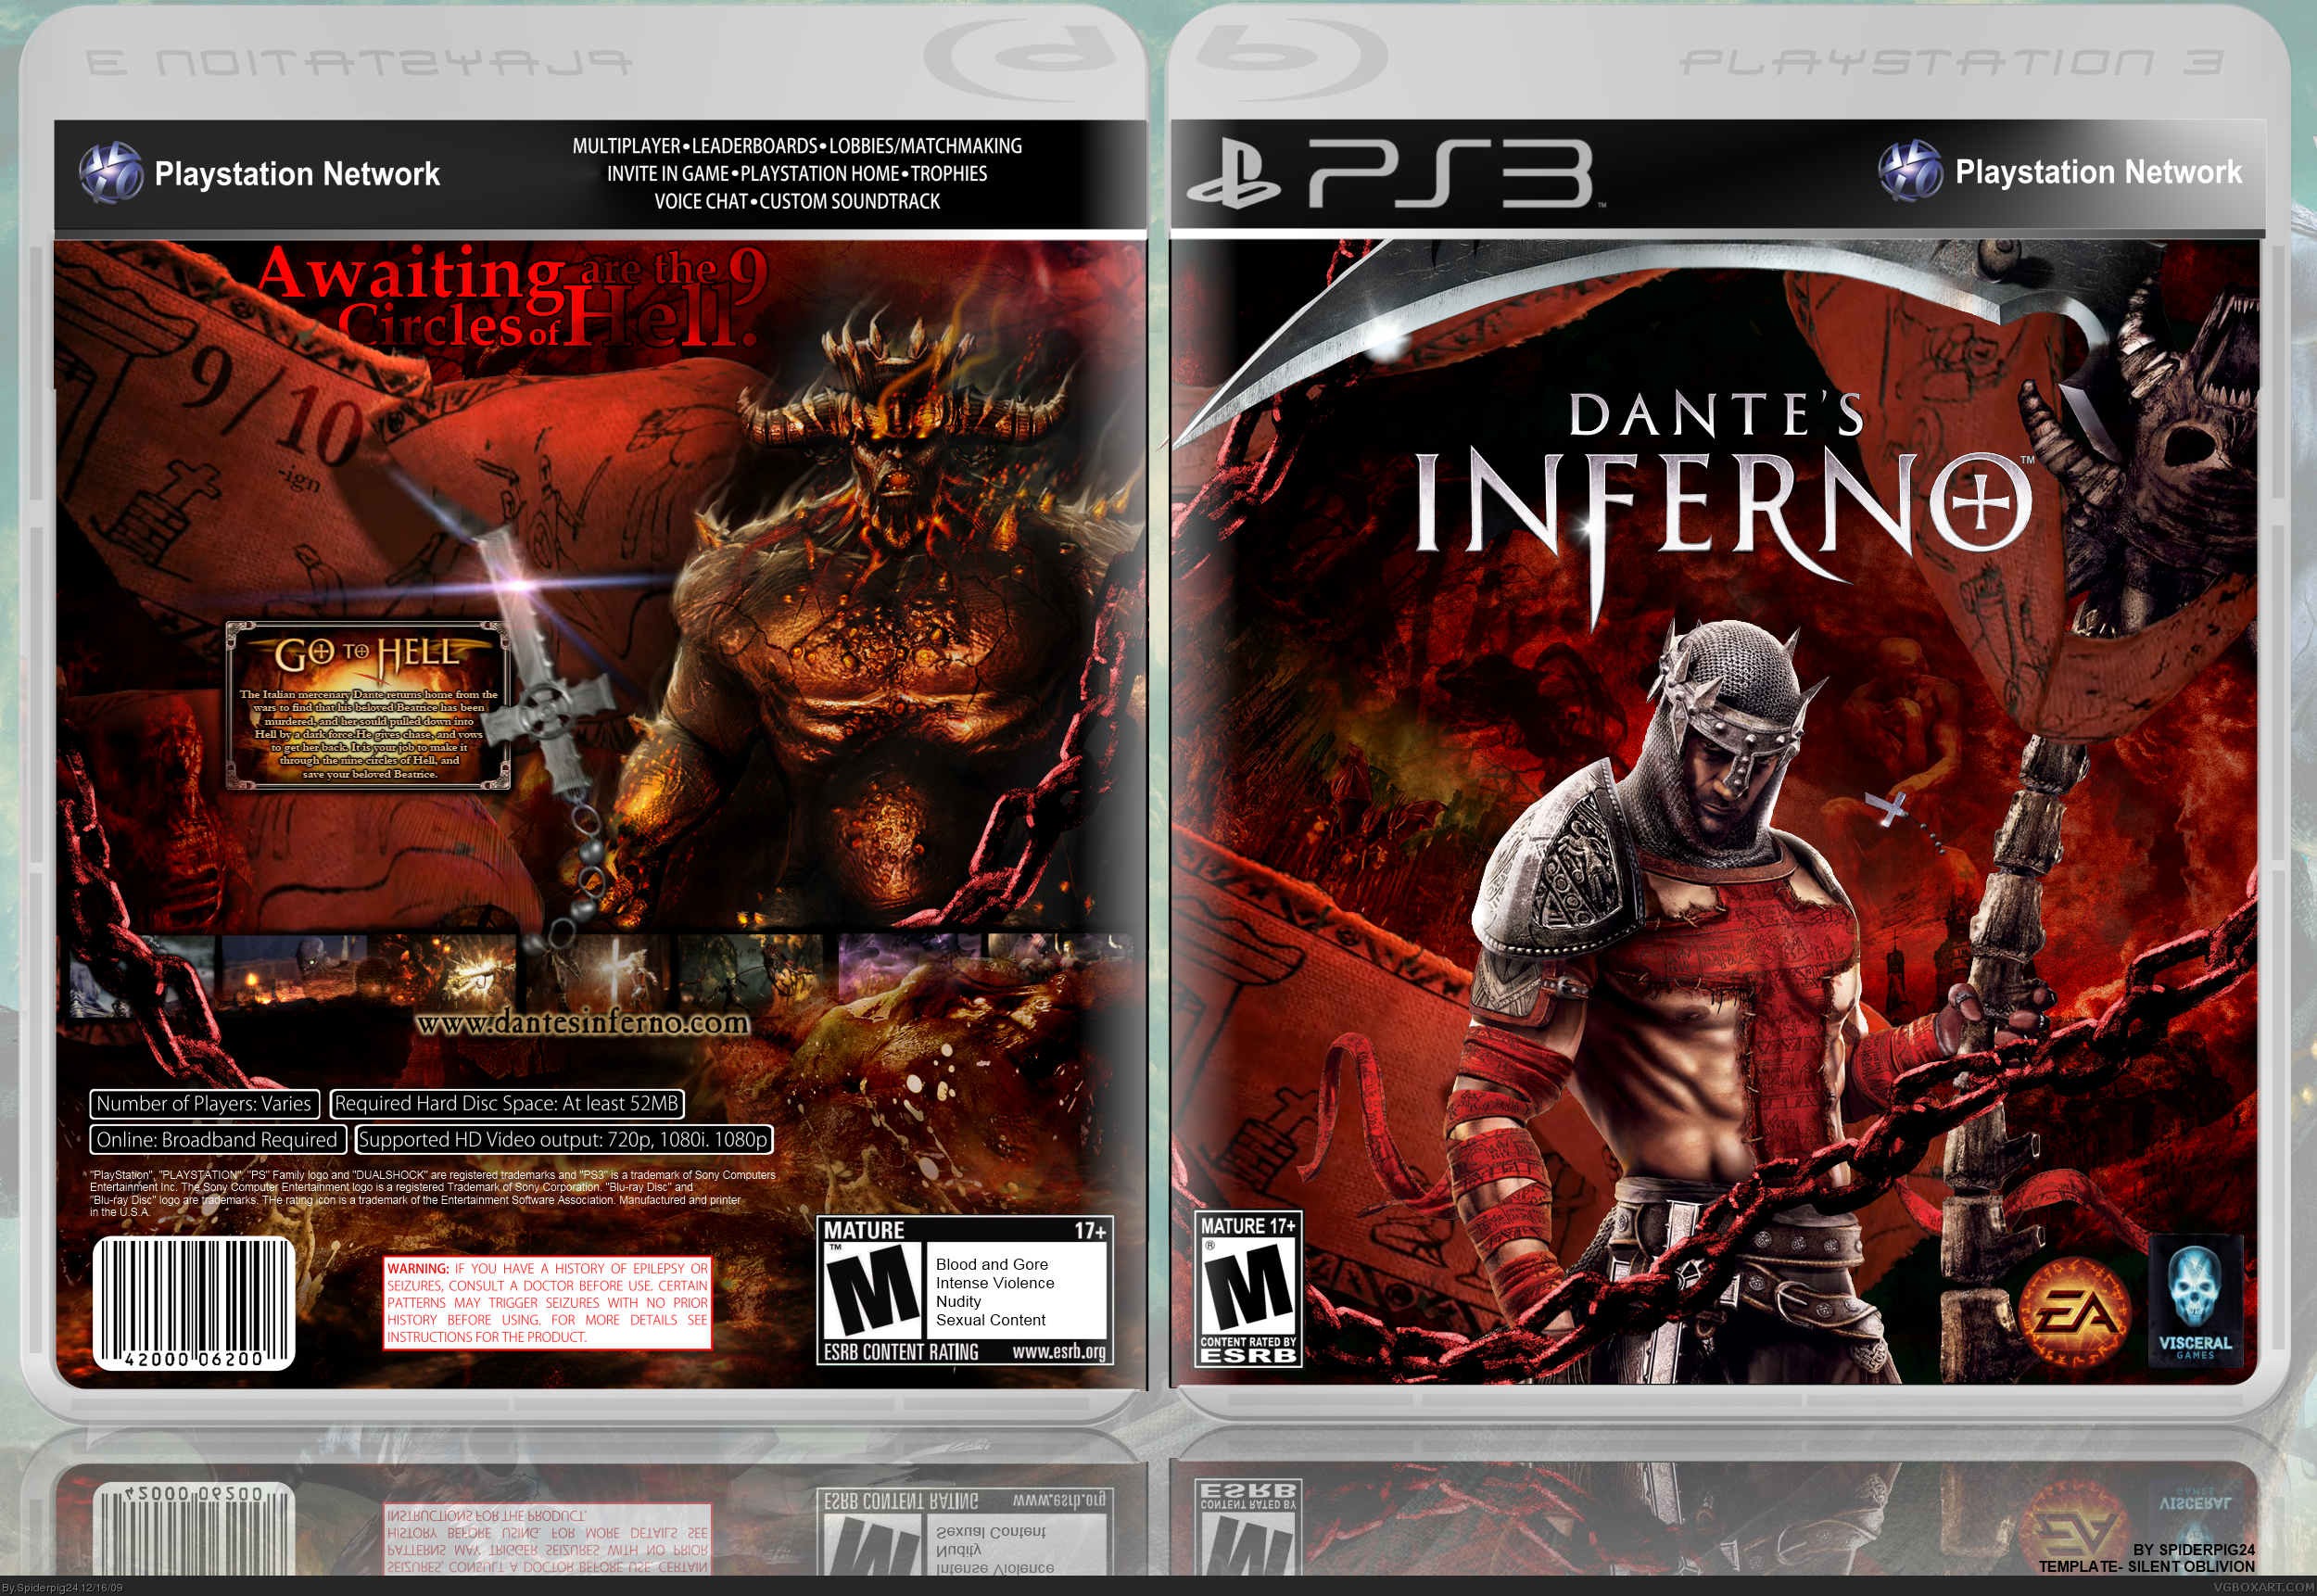 Dantes Inferno box cover